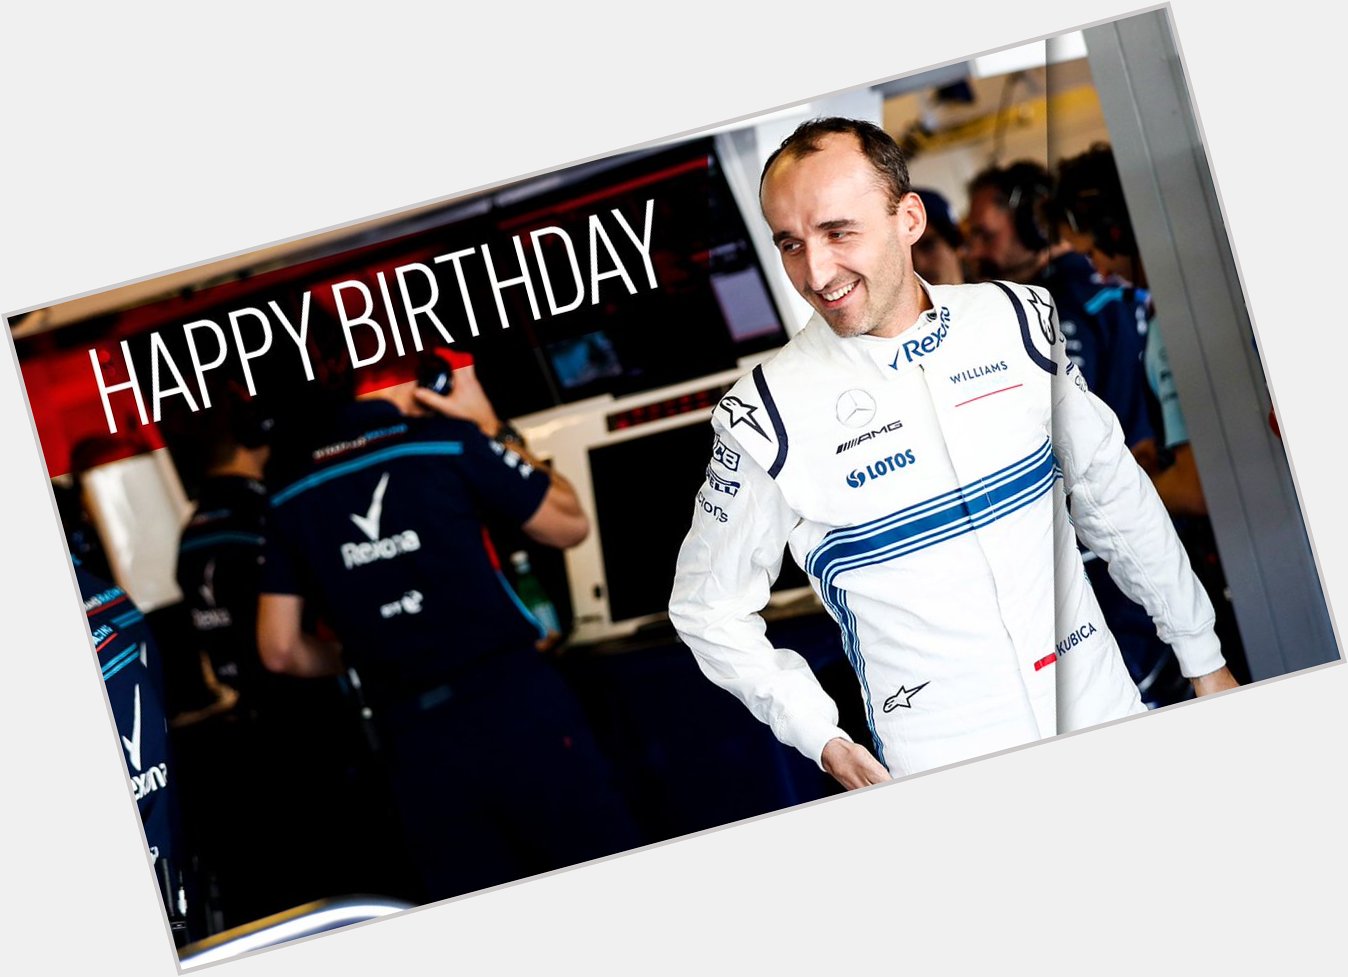 Happy birthday, Robert Kubica! The driver turns 34 today  